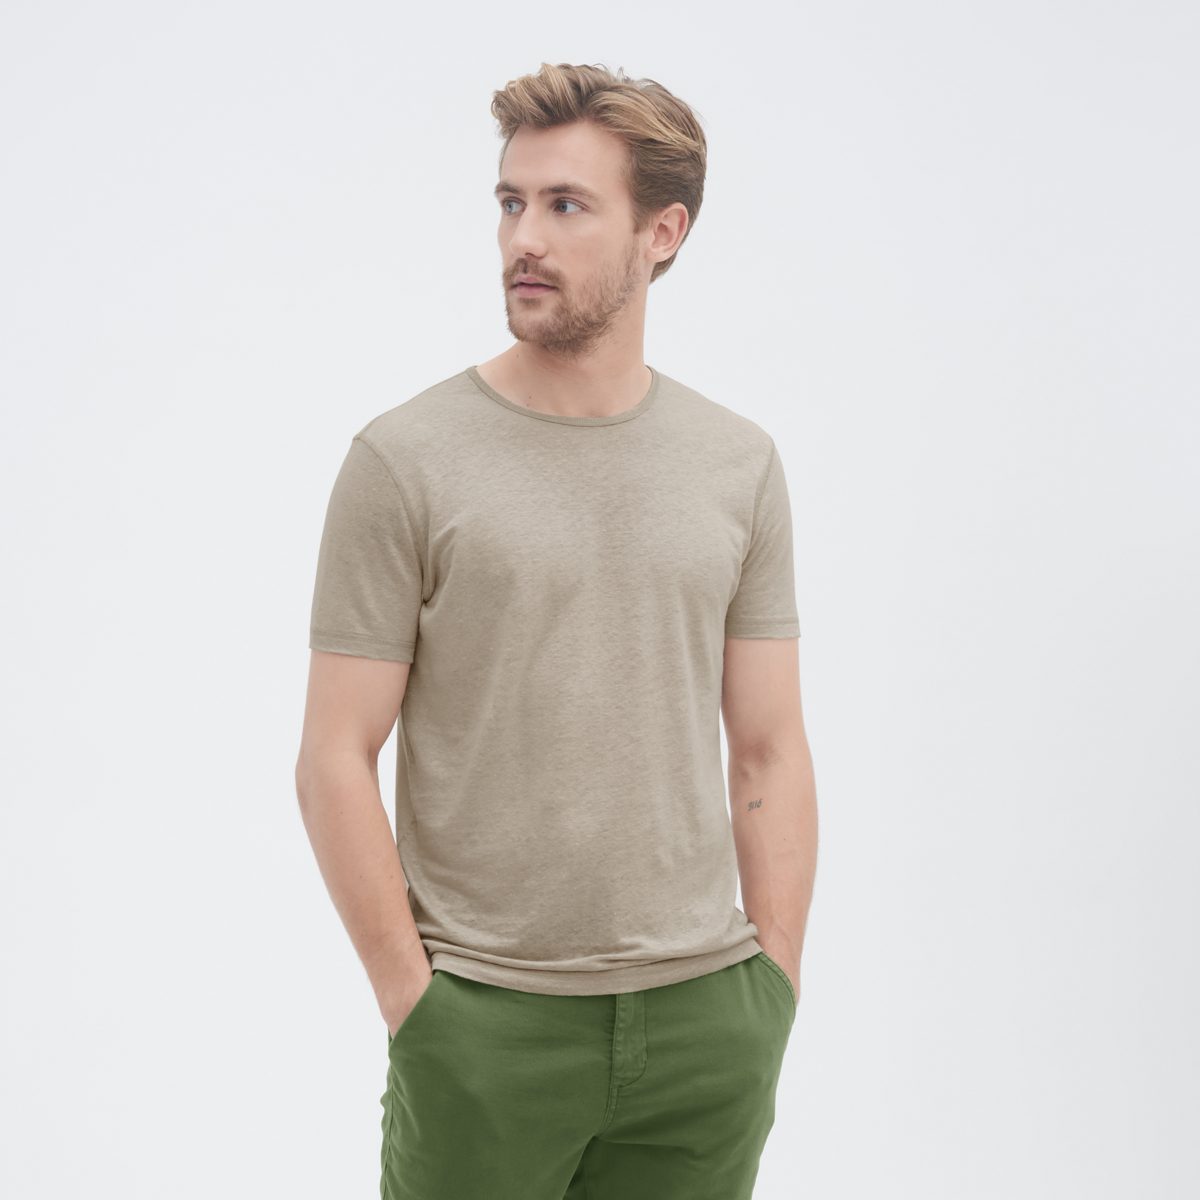 CRAFTS Tage Natural LIVING Leinen-Stoff T-Shirt warme Leichter ANDY für Linen